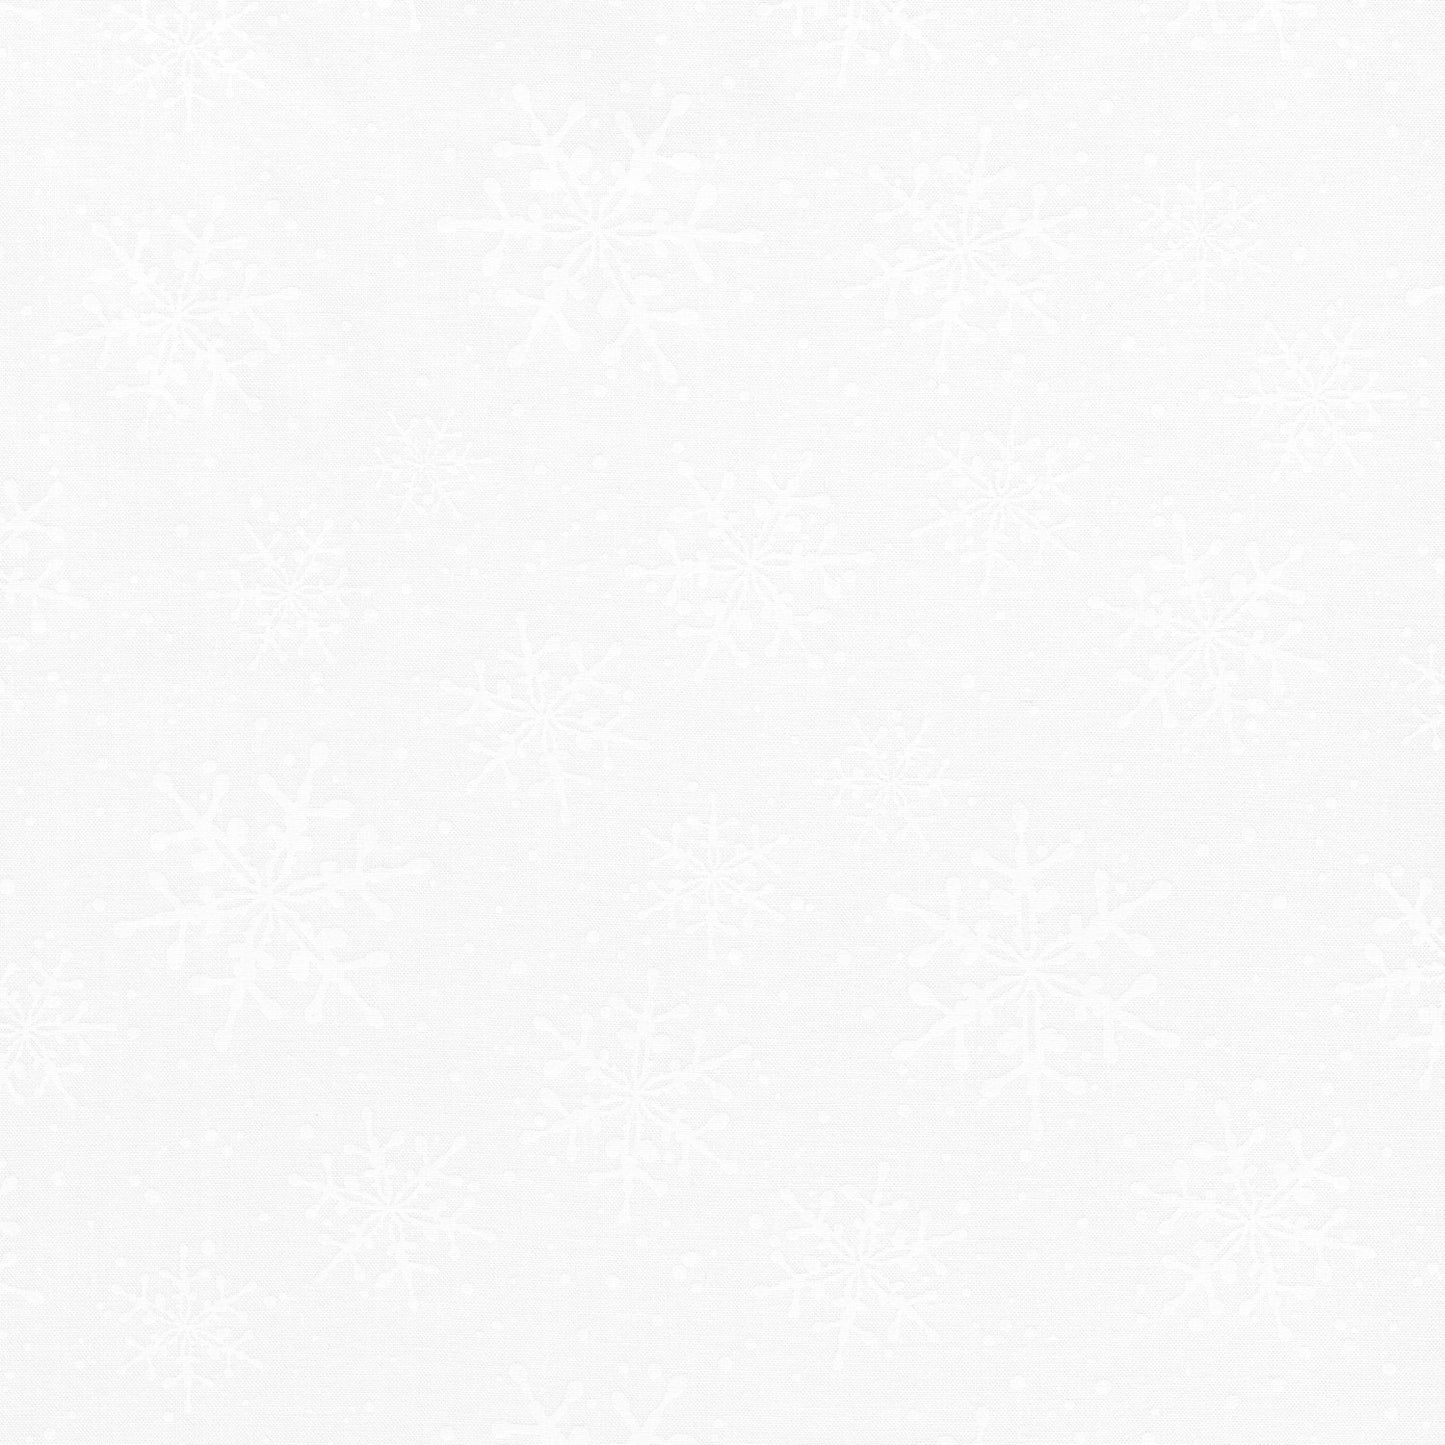 Solitaire Whites - Ultra White Snowflakes Ultra White Yardage Primary Image